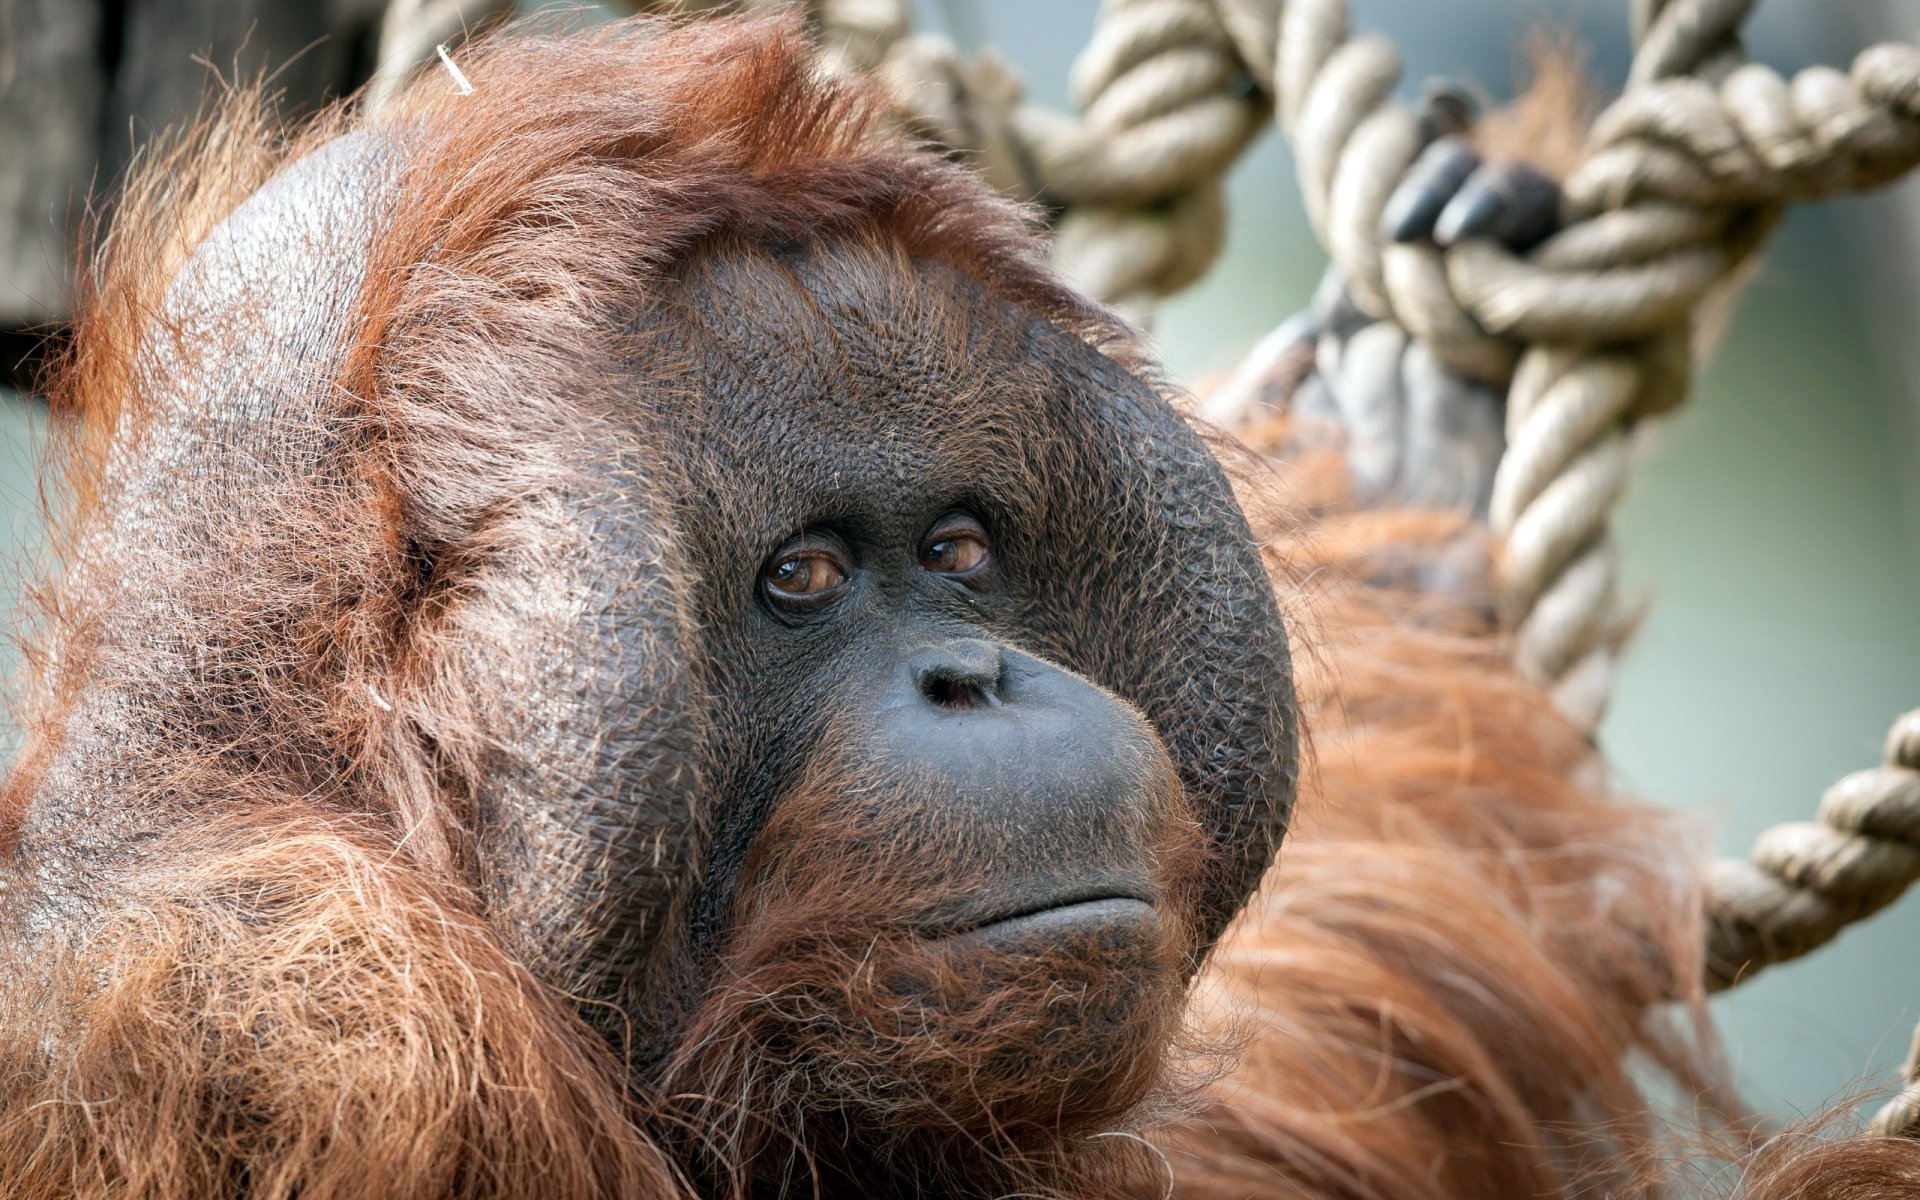  Orangutan  HD Wallpaper Background Image 2560x1600 ID 